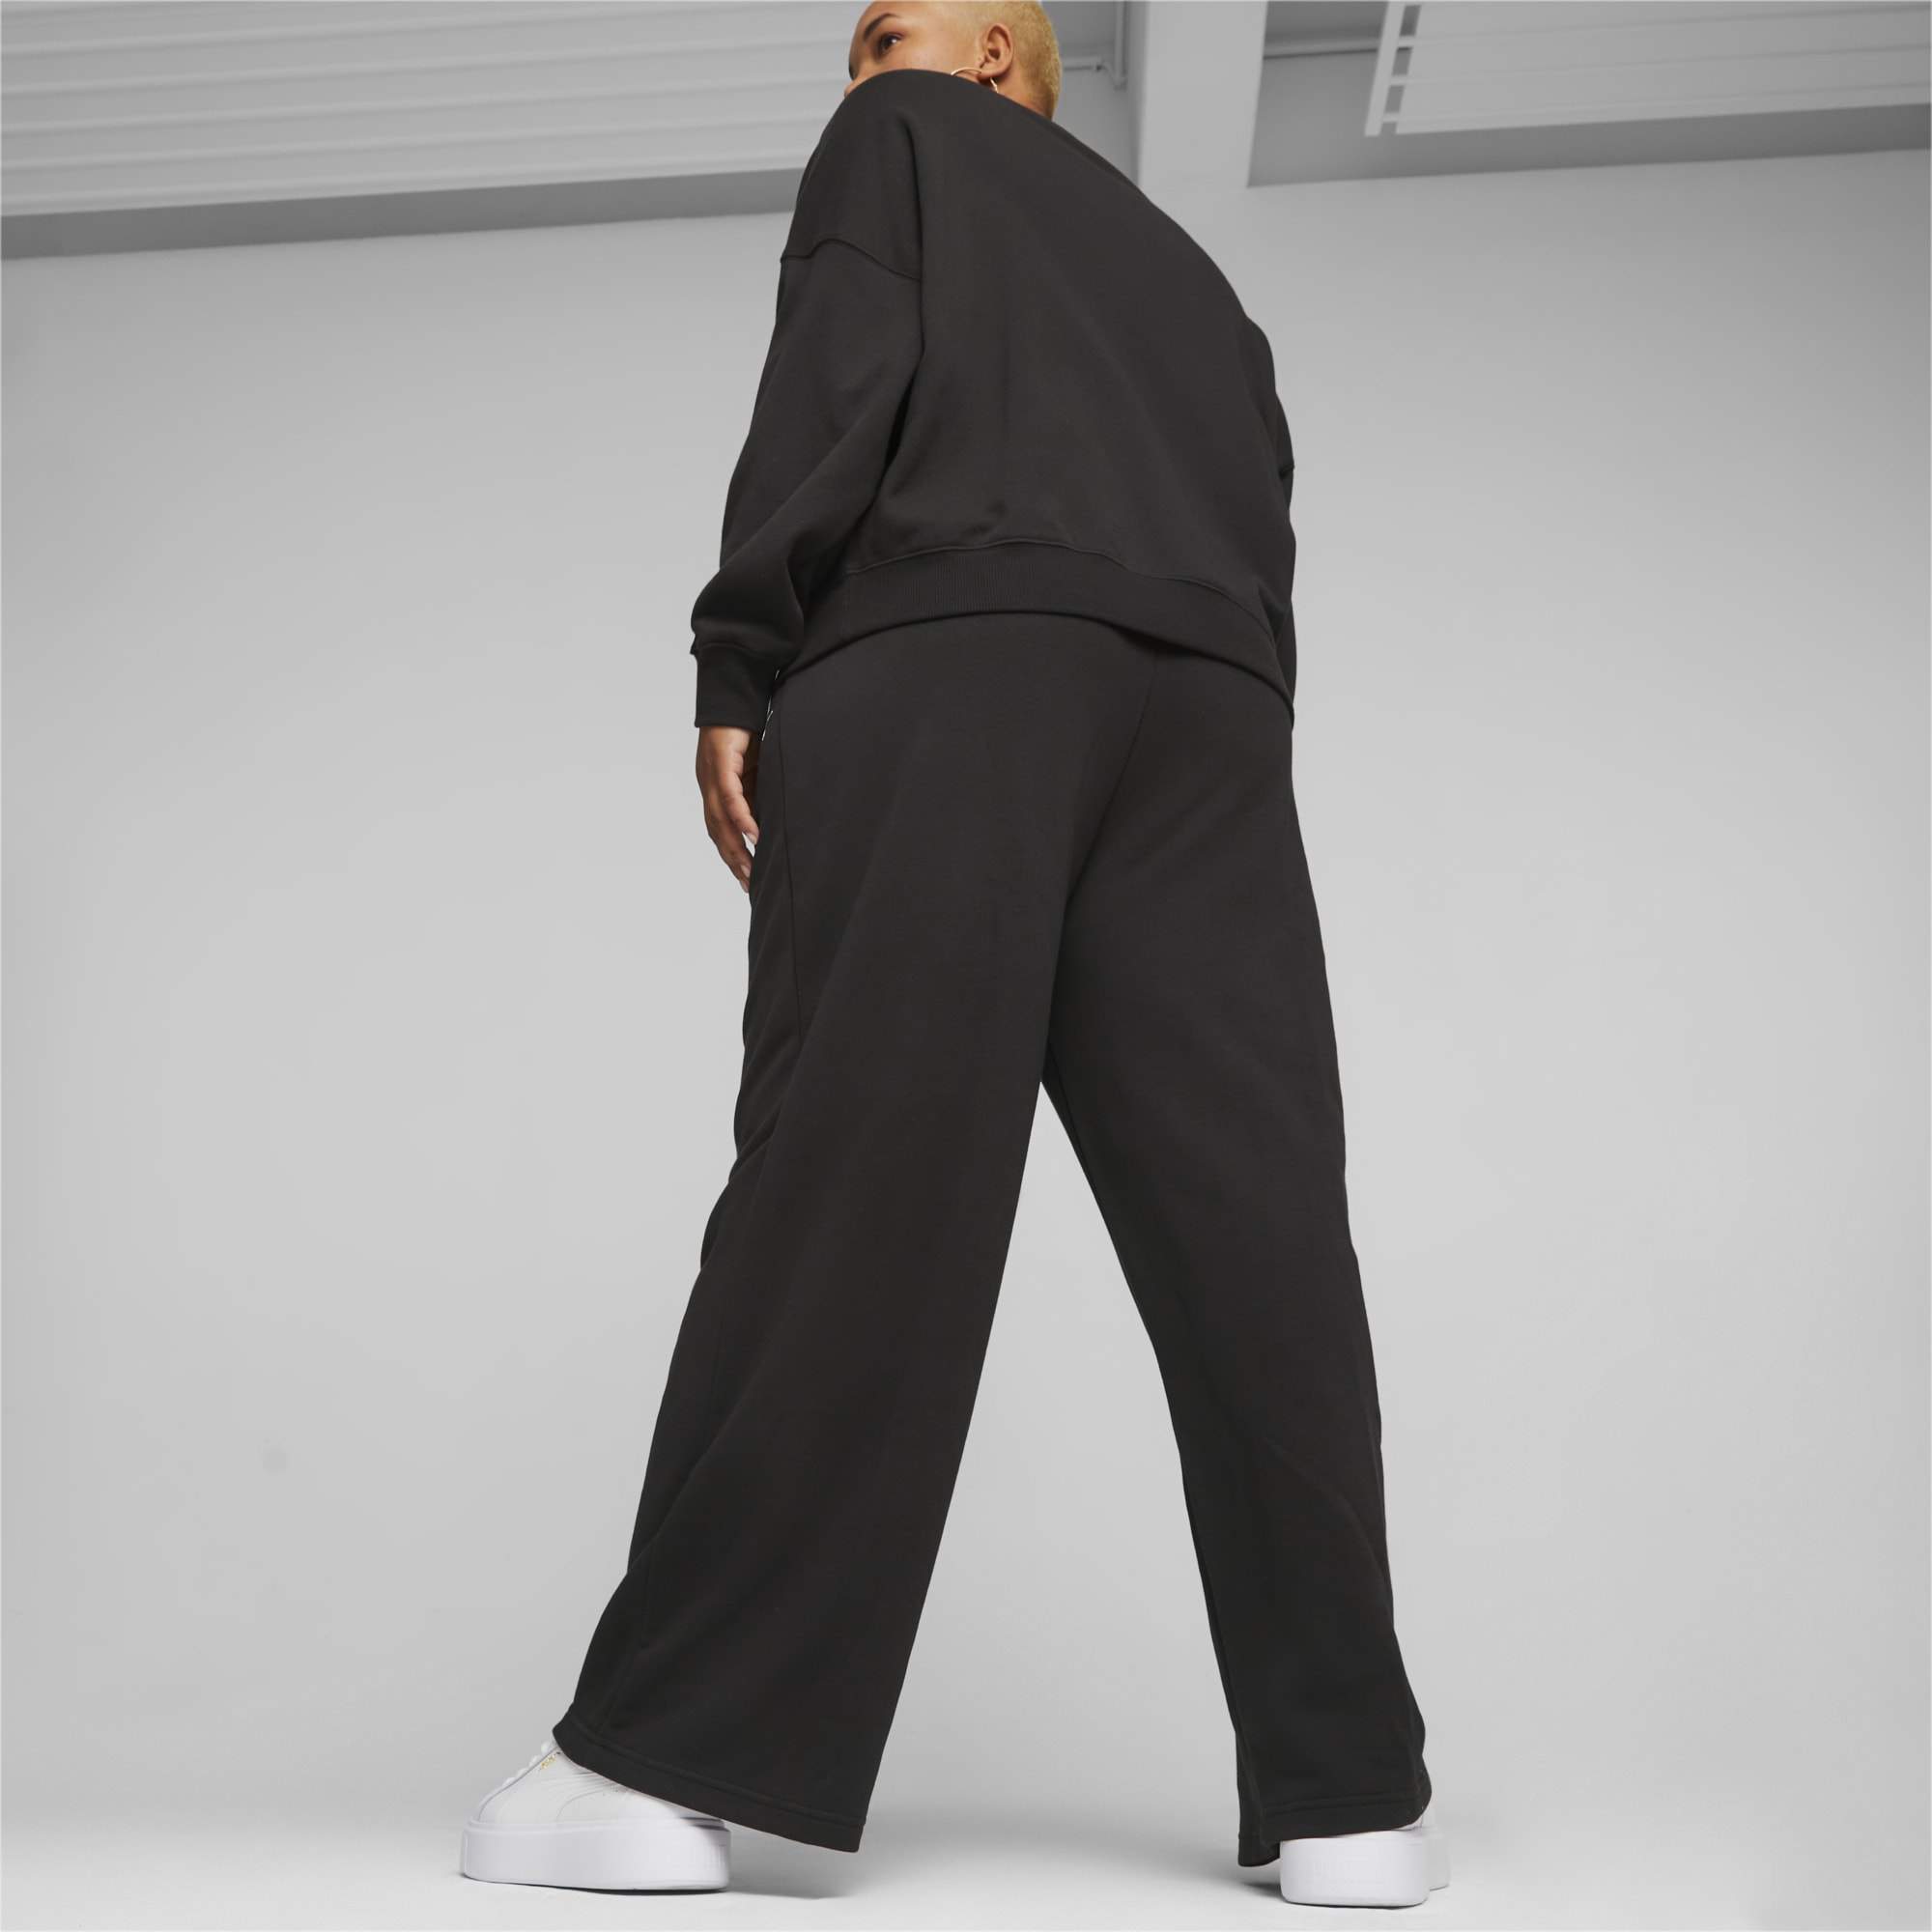 PUMA Classics Women's Relaxed Sweatpants, Black, Size M, Clothing